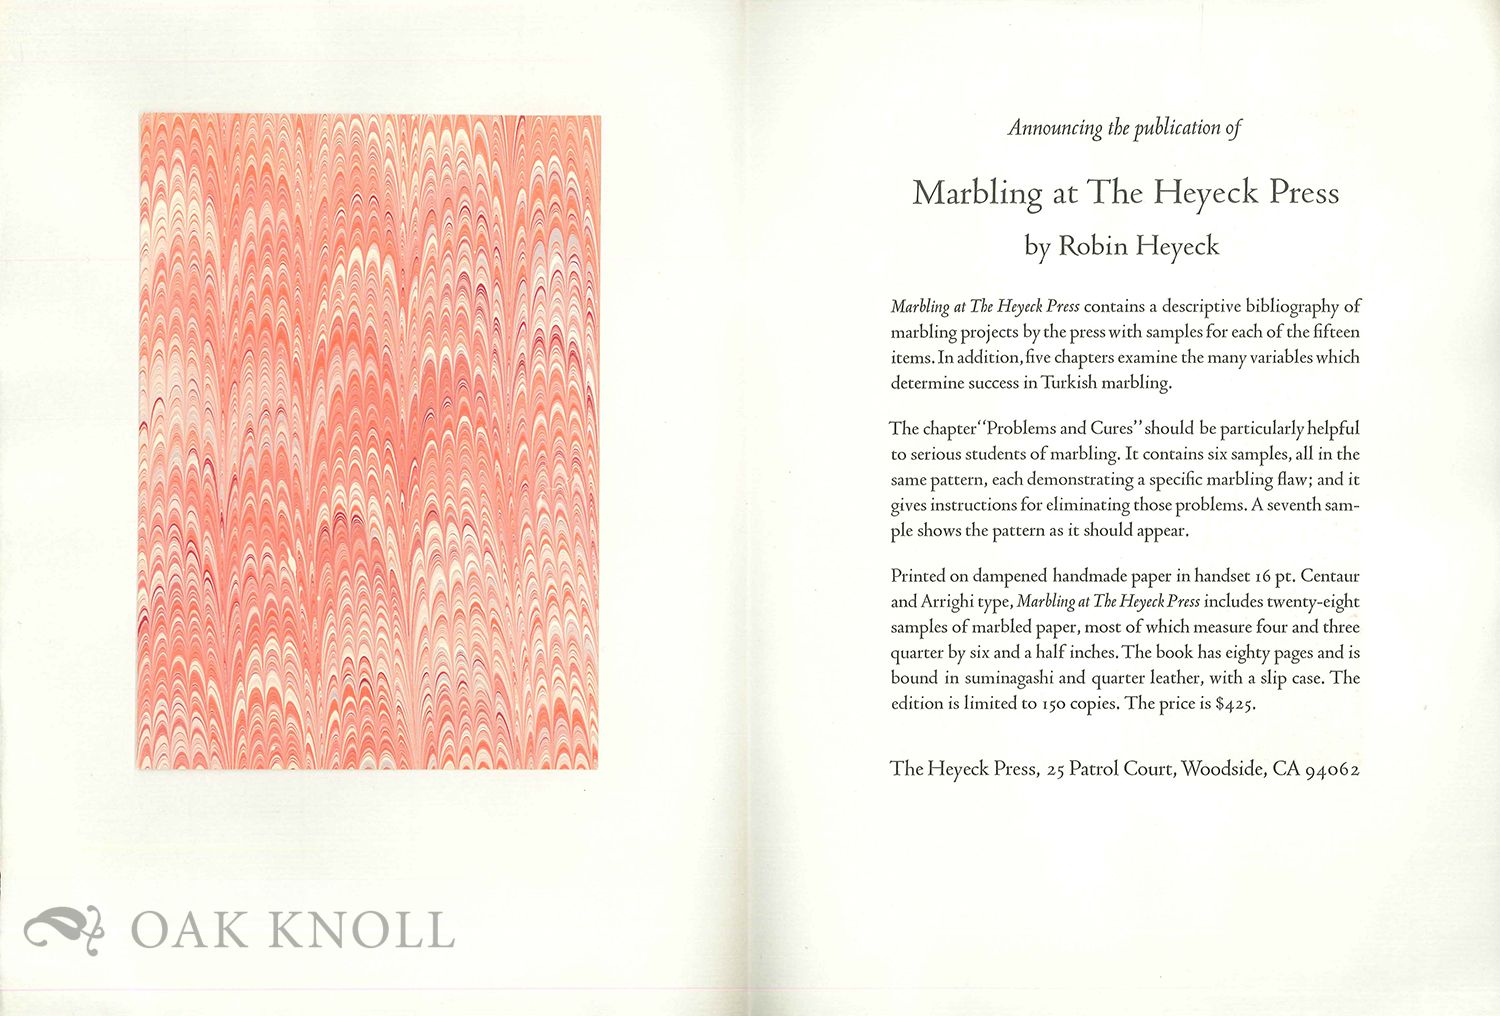 MARBLING AT THE HEYECK PRESS by Robin Heyeck on Oak Knoll